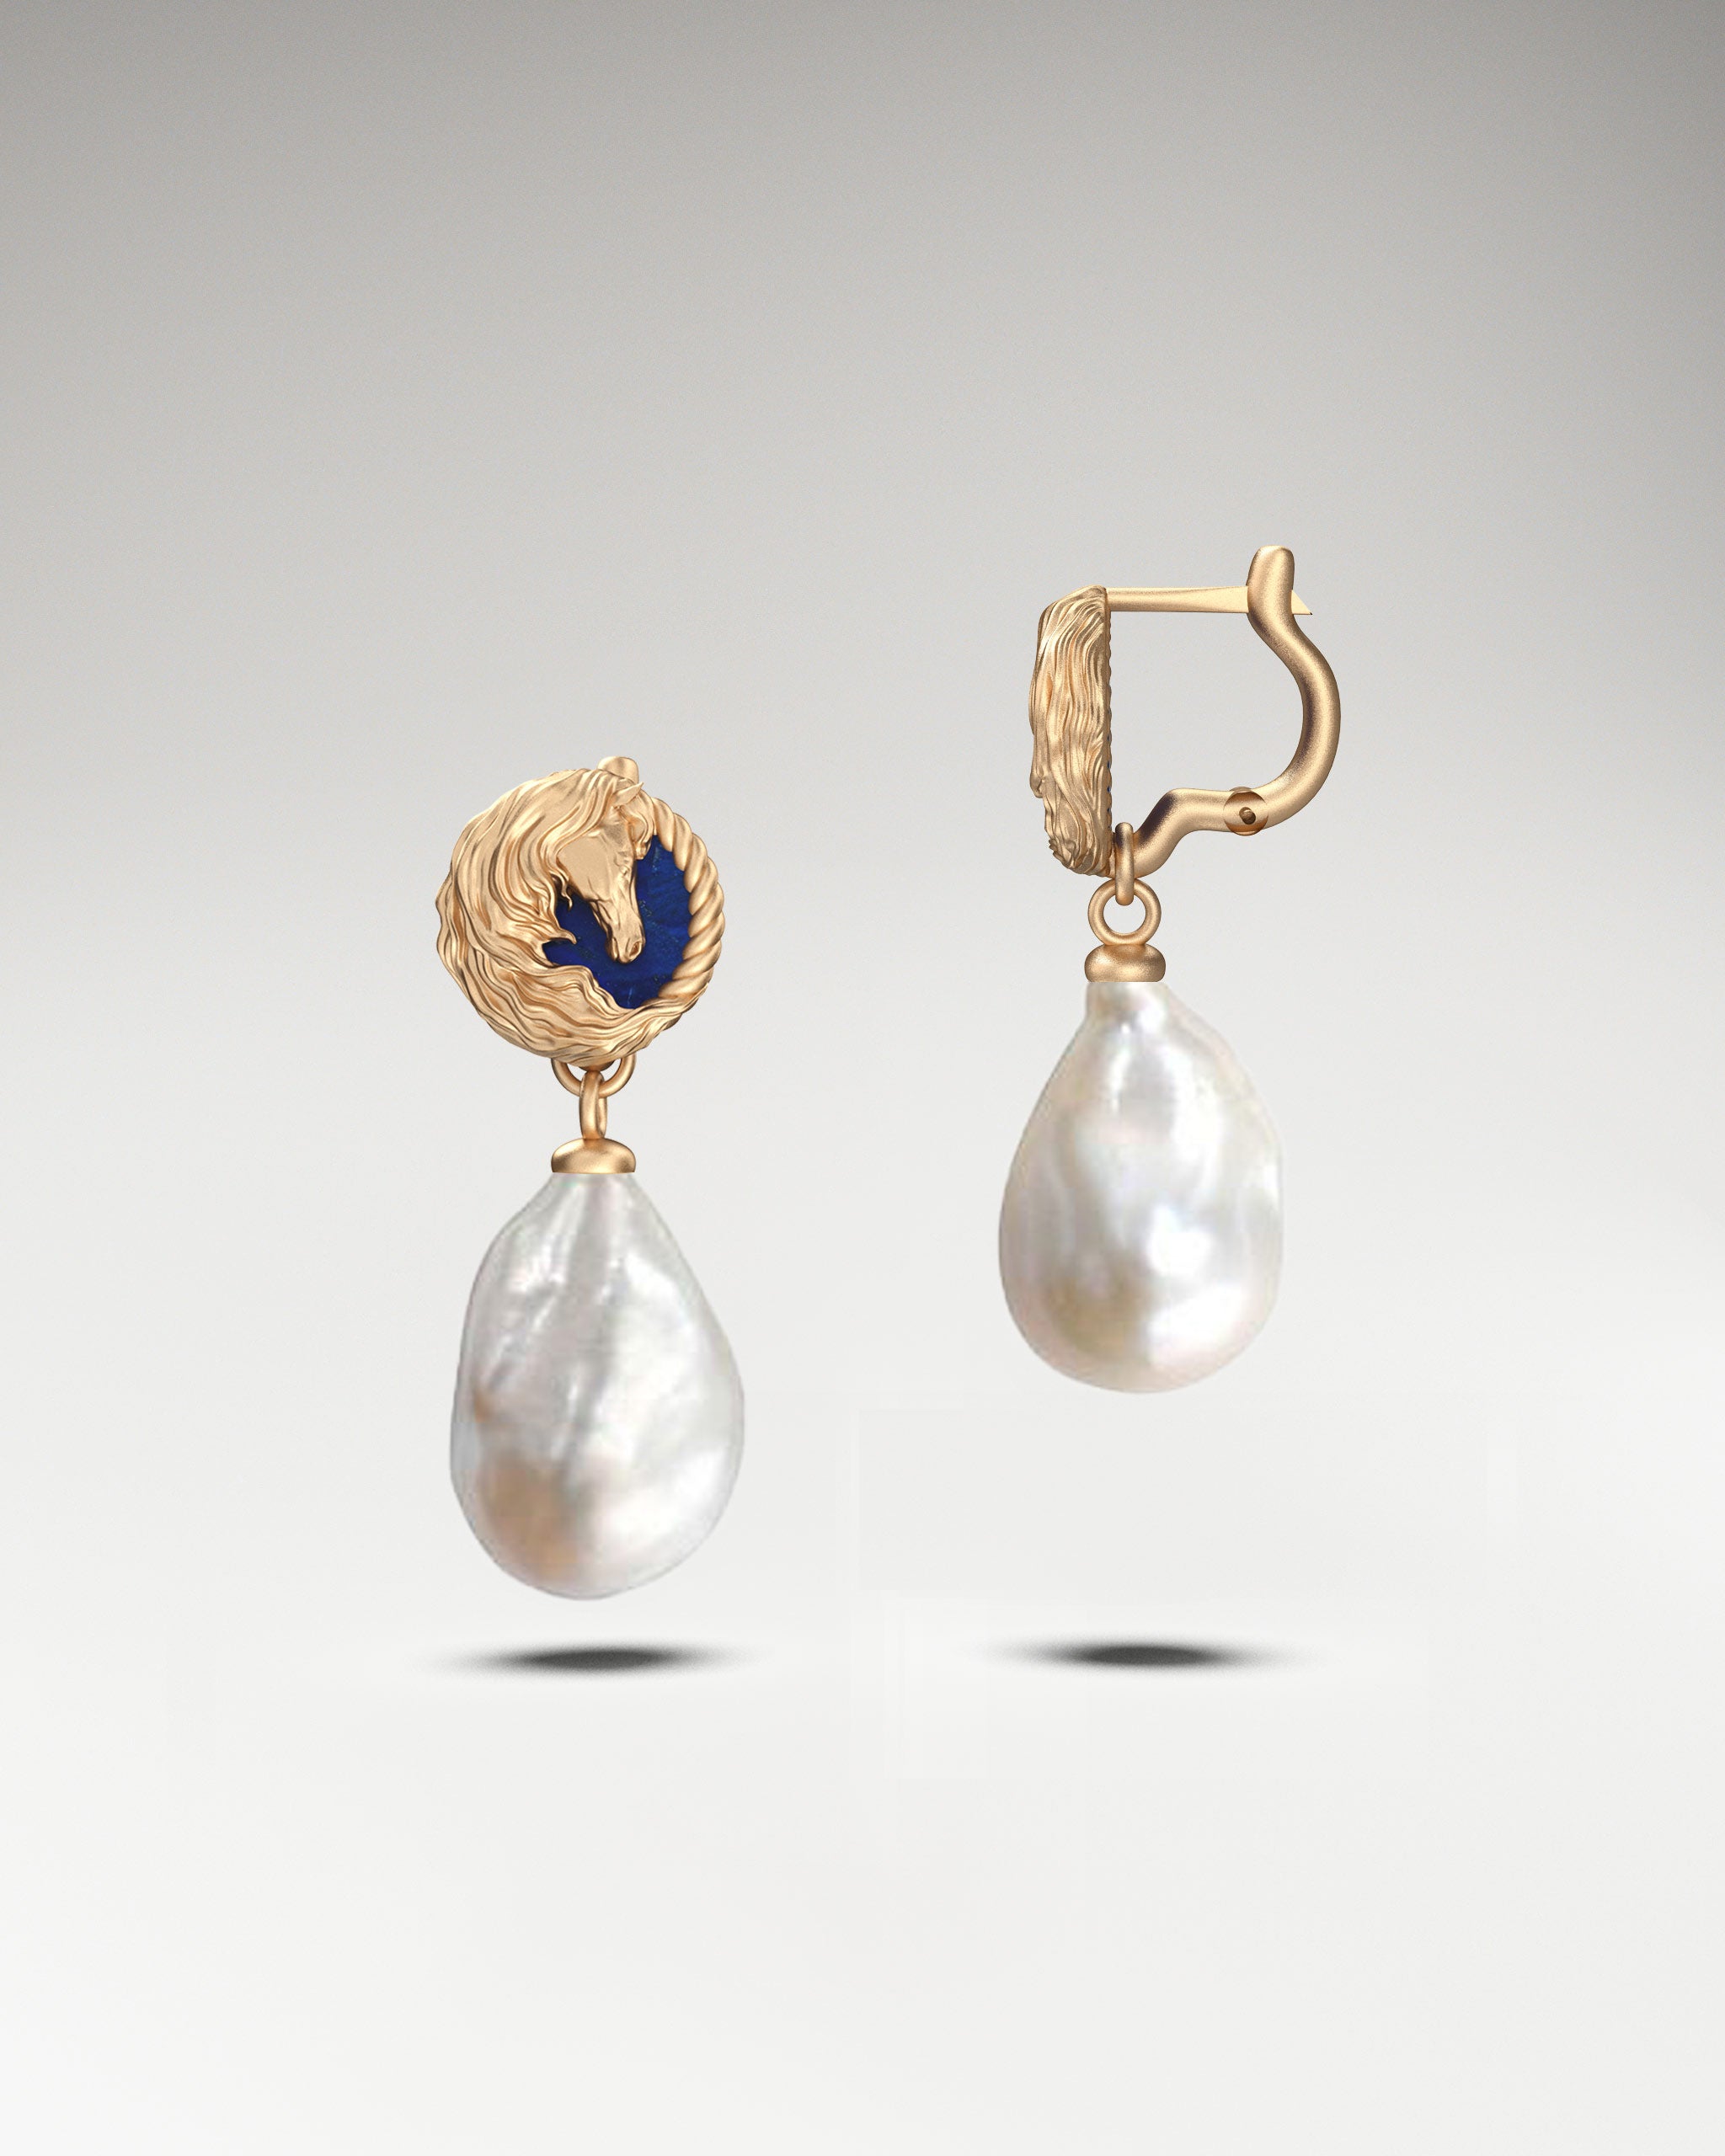 Horse Sculpture earrings with Pearl gemstone